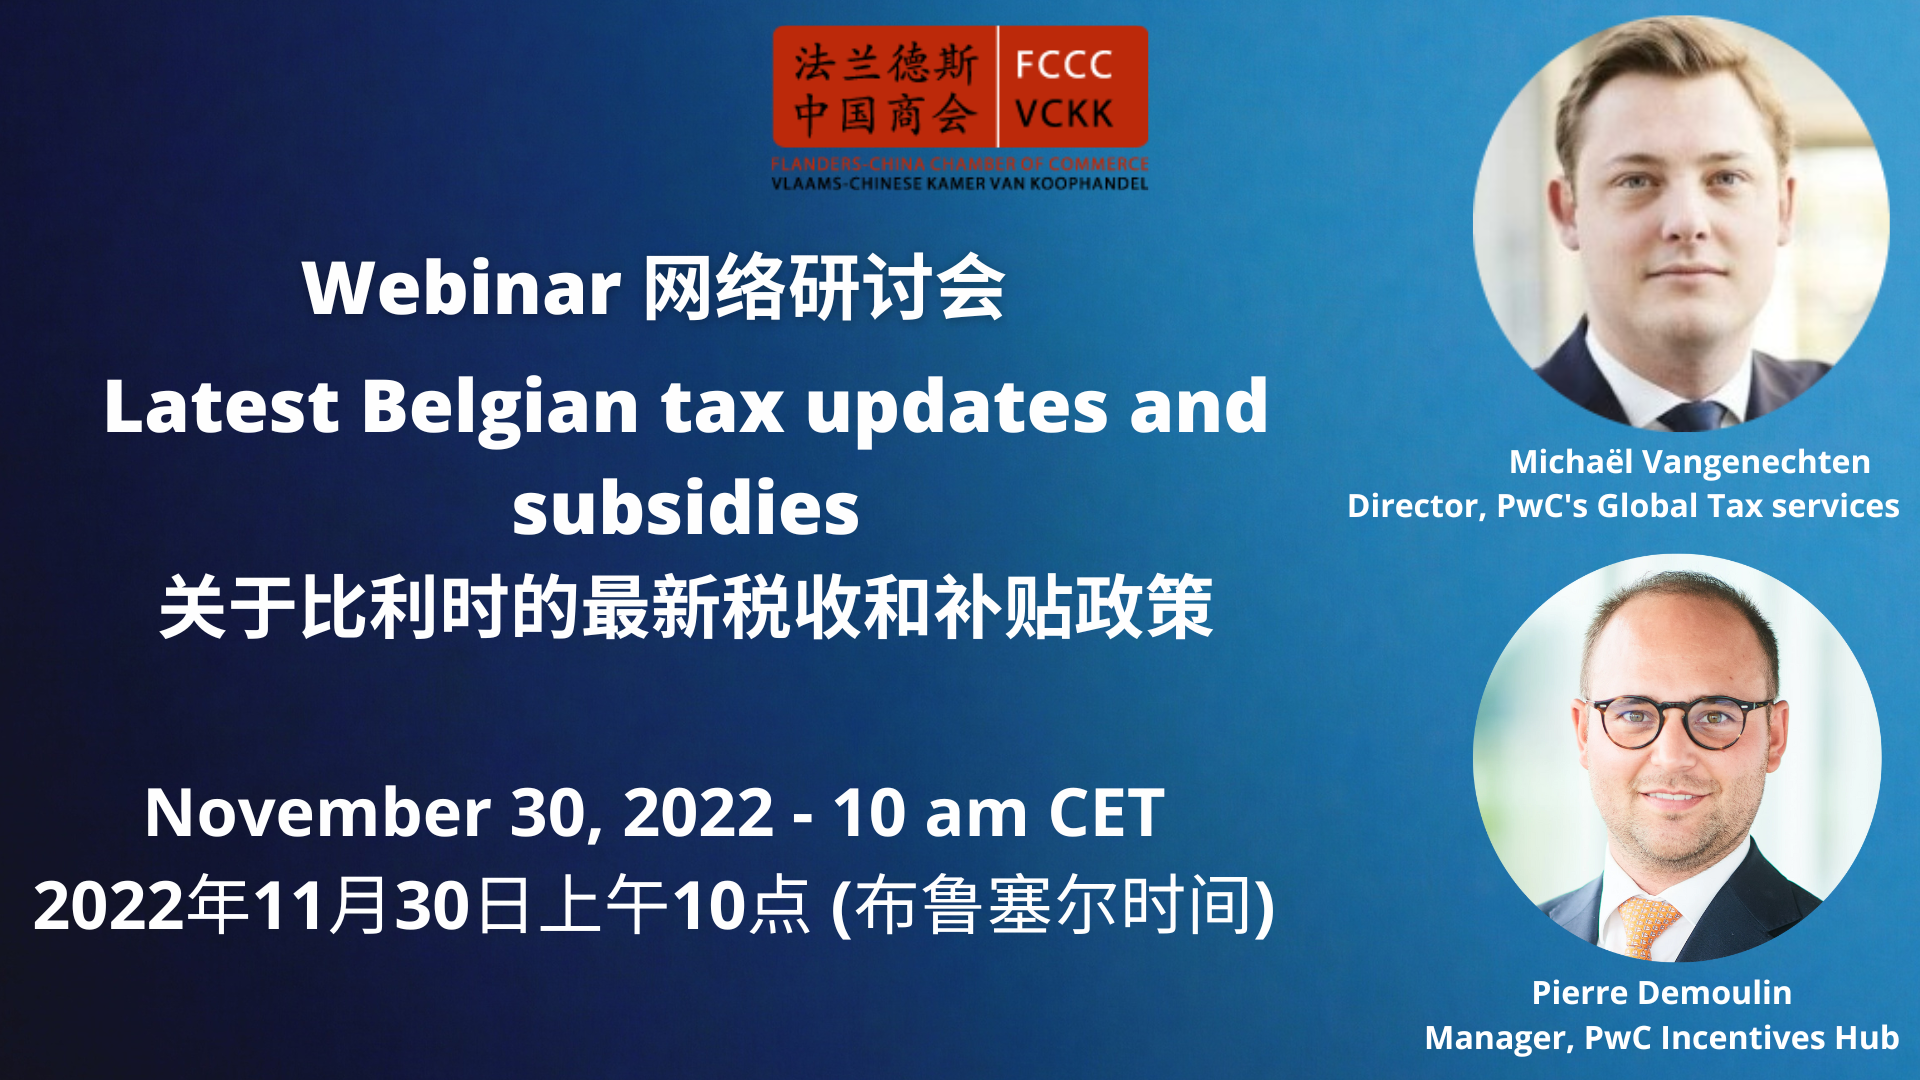 Webinar: Latest Belgian tax updates and subsidies - 30 November - 10 am CET